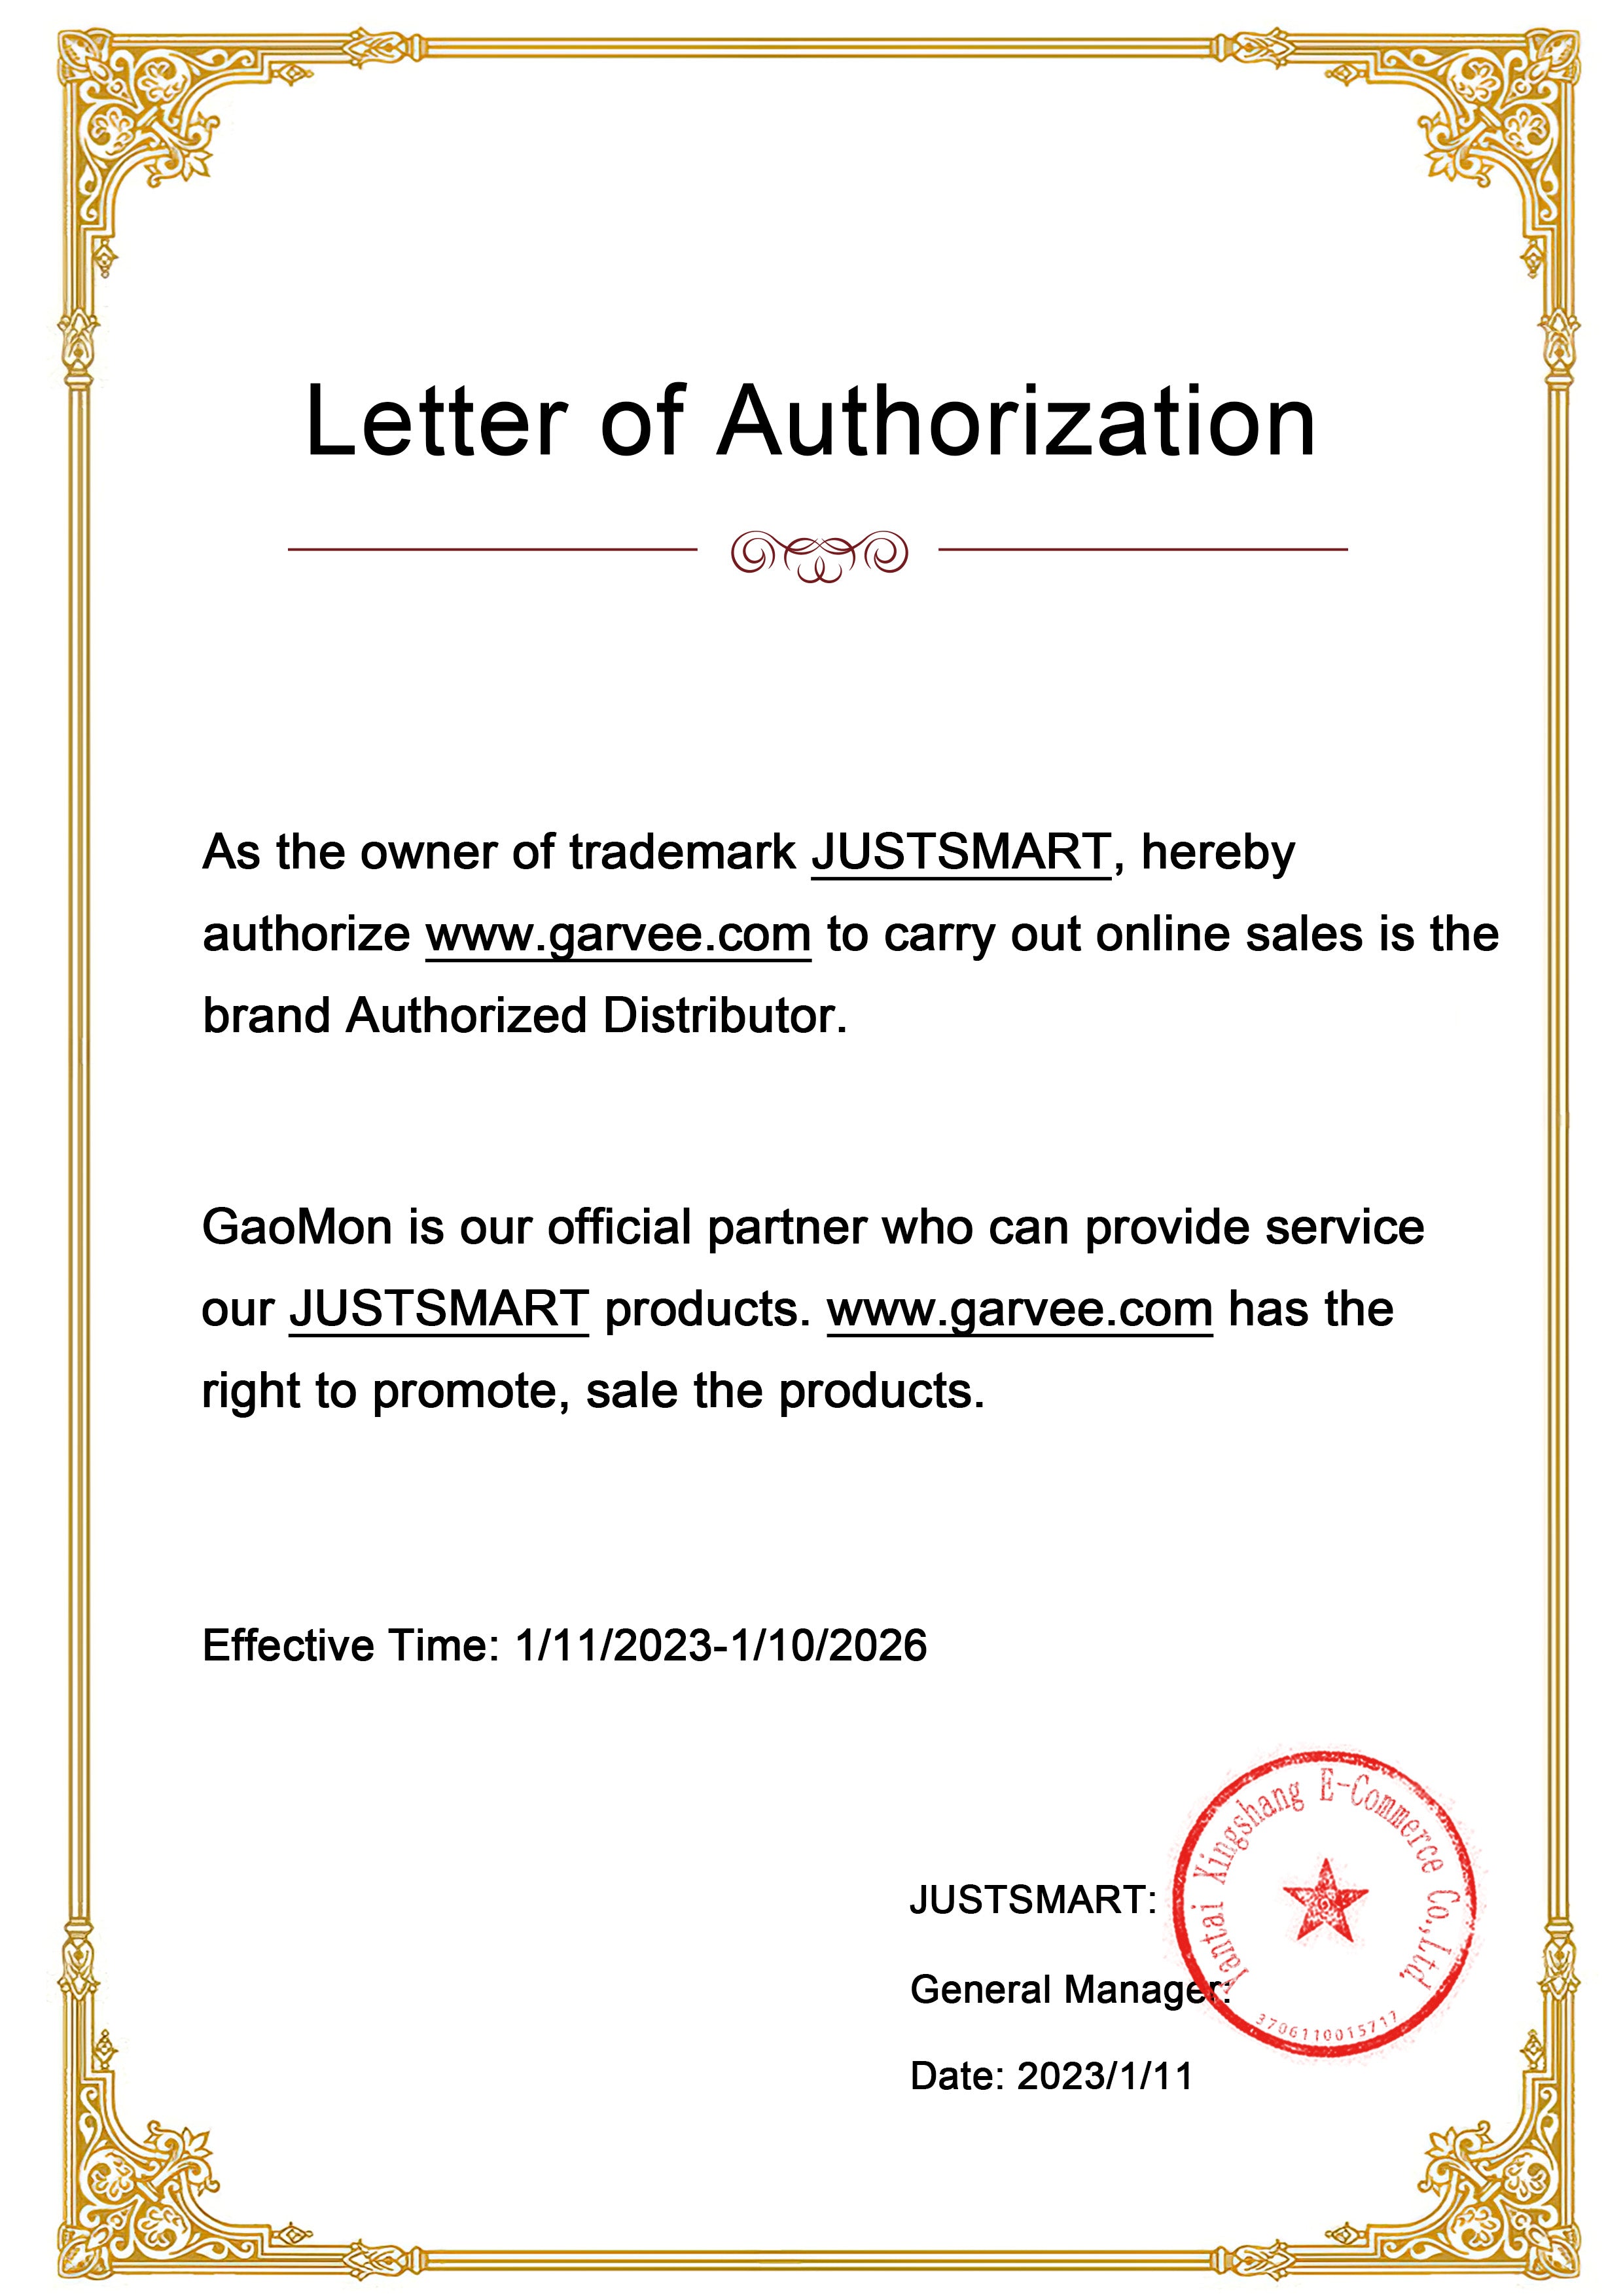 JUSTSMART Brand Authorization